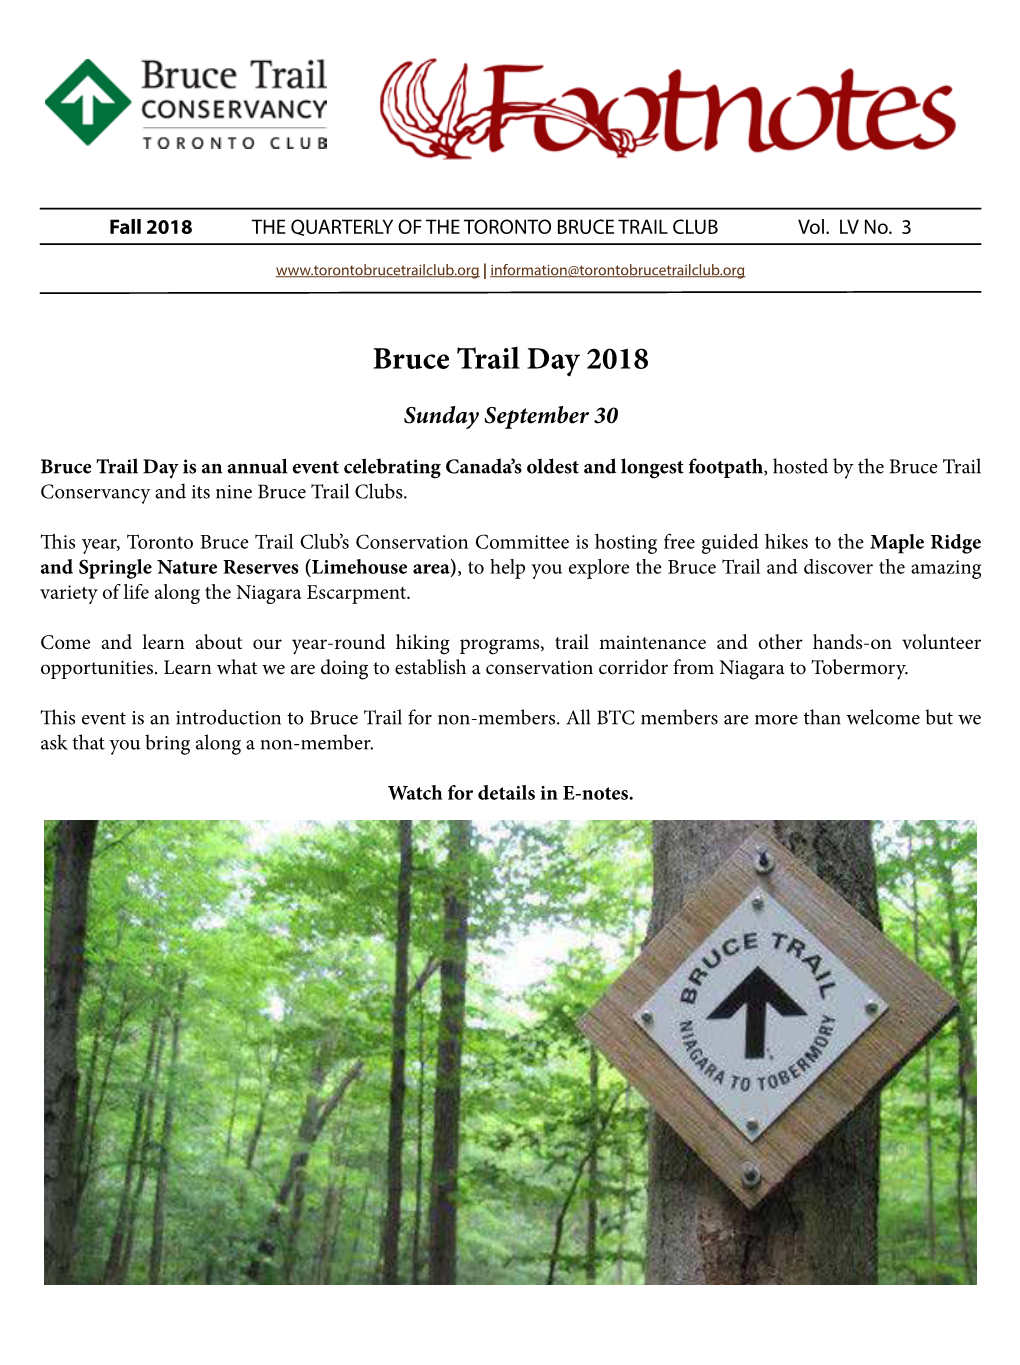 Bruce Trail Day 2018